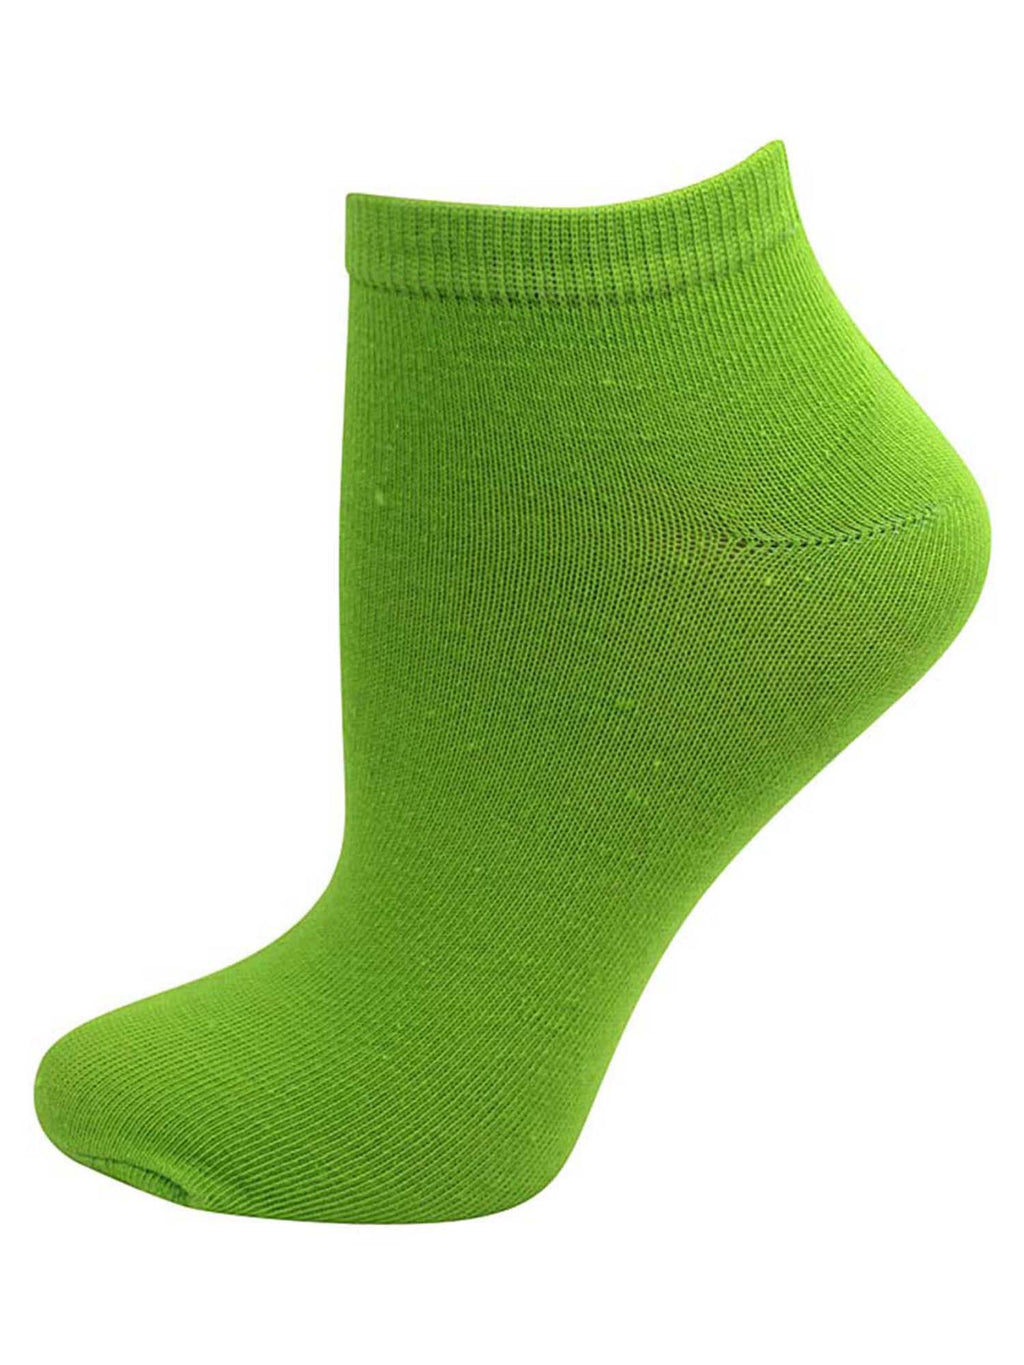 Solid Light Color Assorted 6-Pack Ladies Ankle Socks